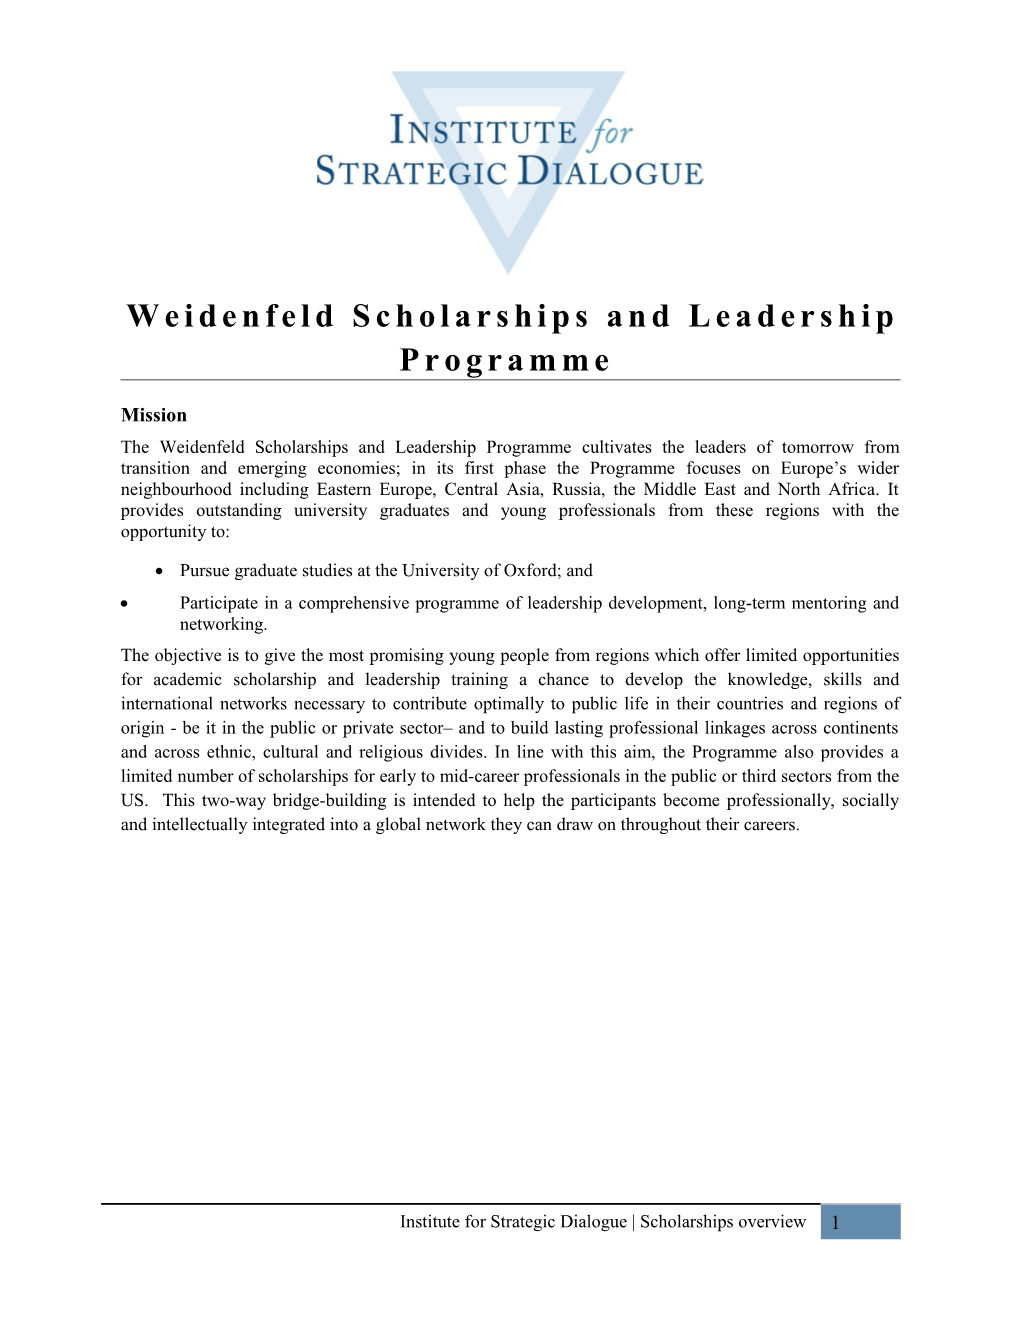 Weidenfeld Scholarships and Leadership Programme